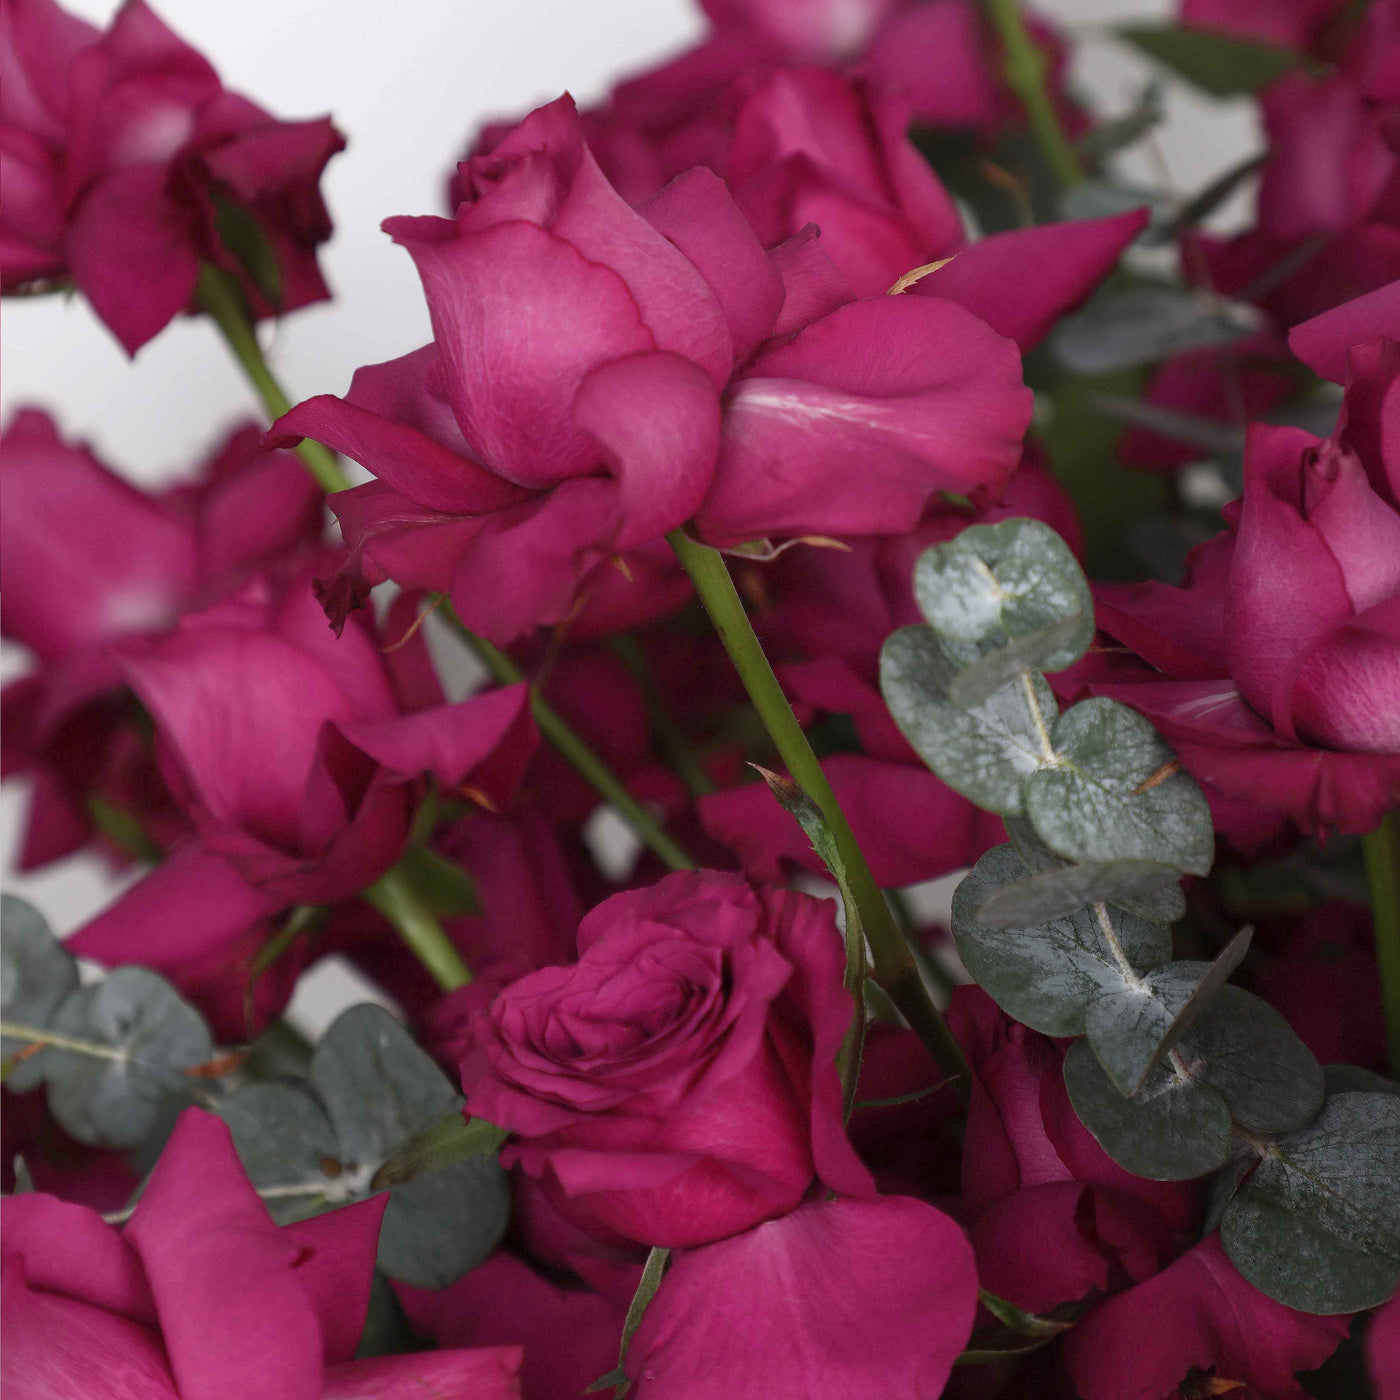 100 Purple Roses in Box - Fresh Flowers